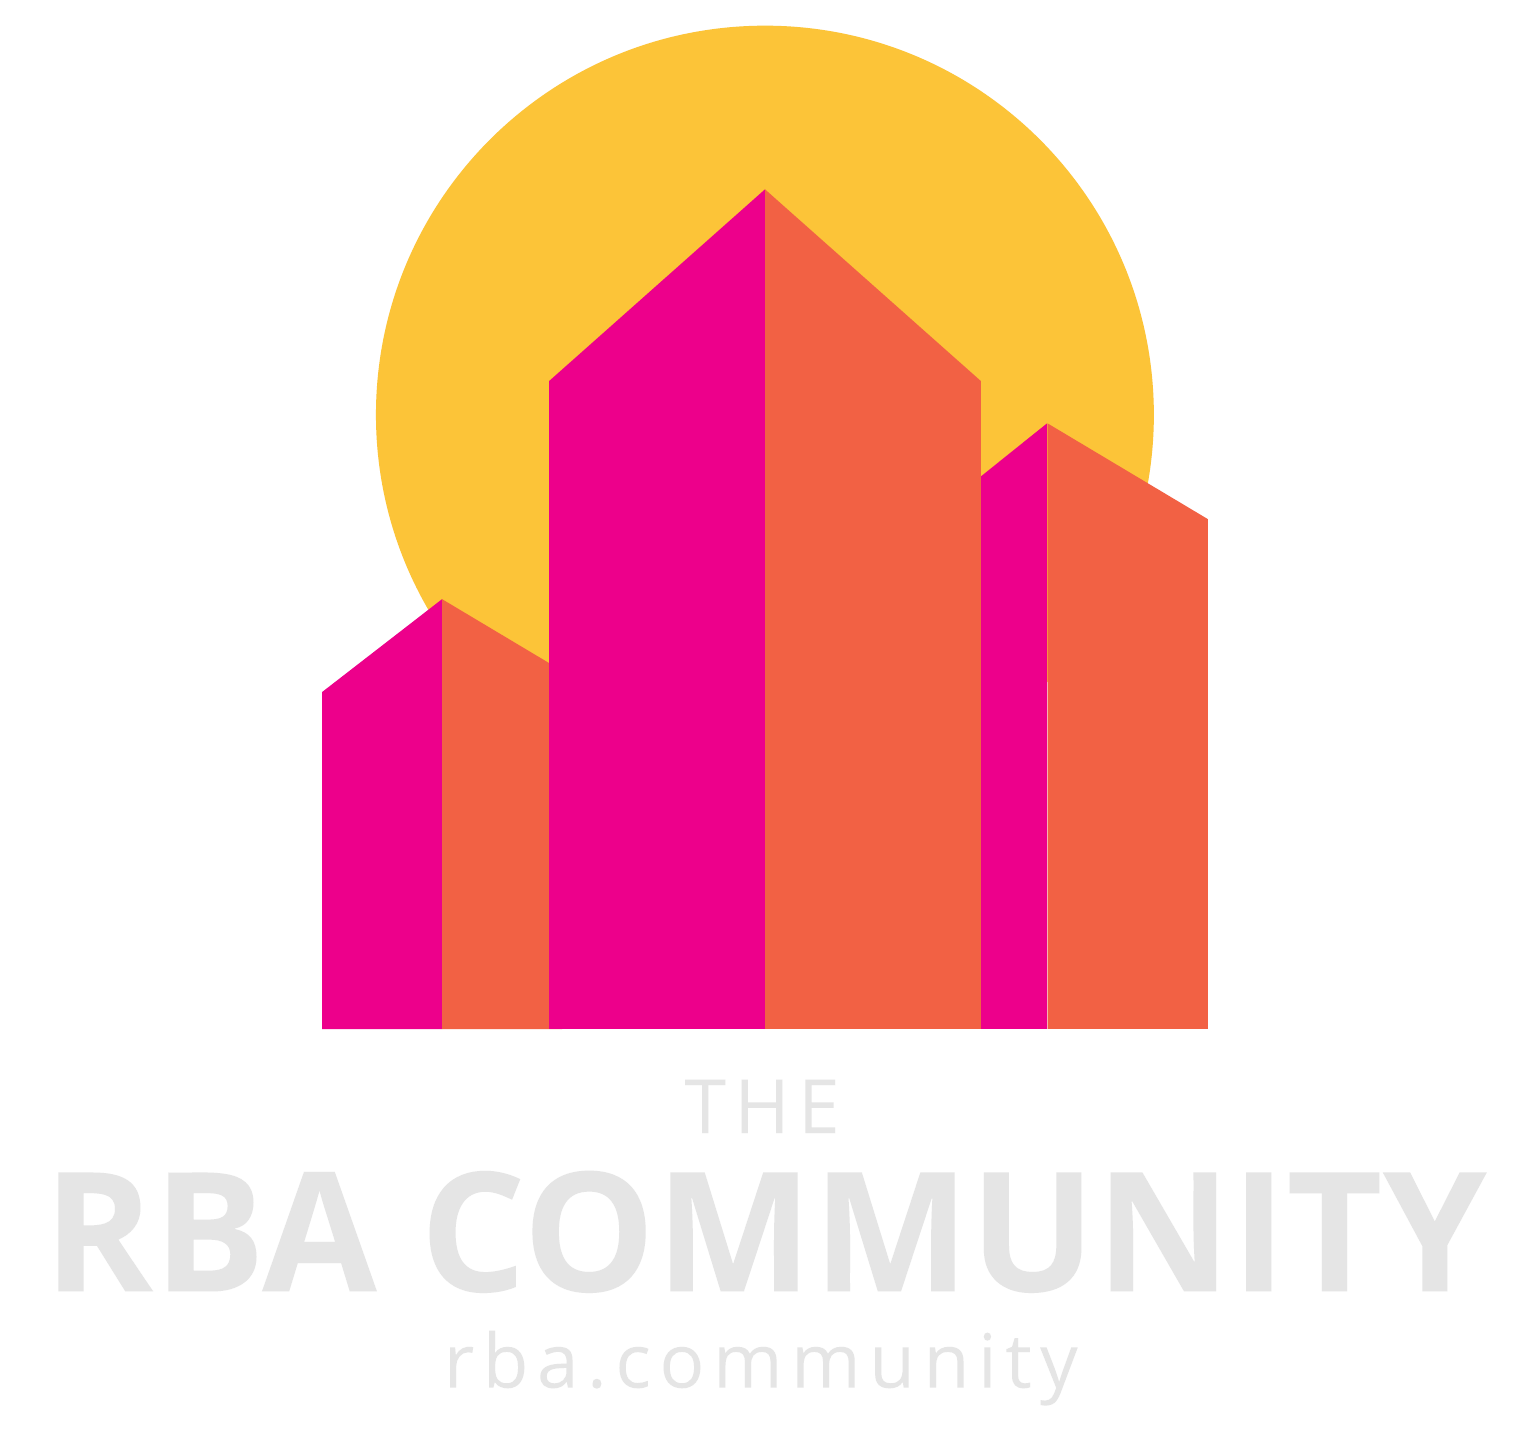 The RBA Community